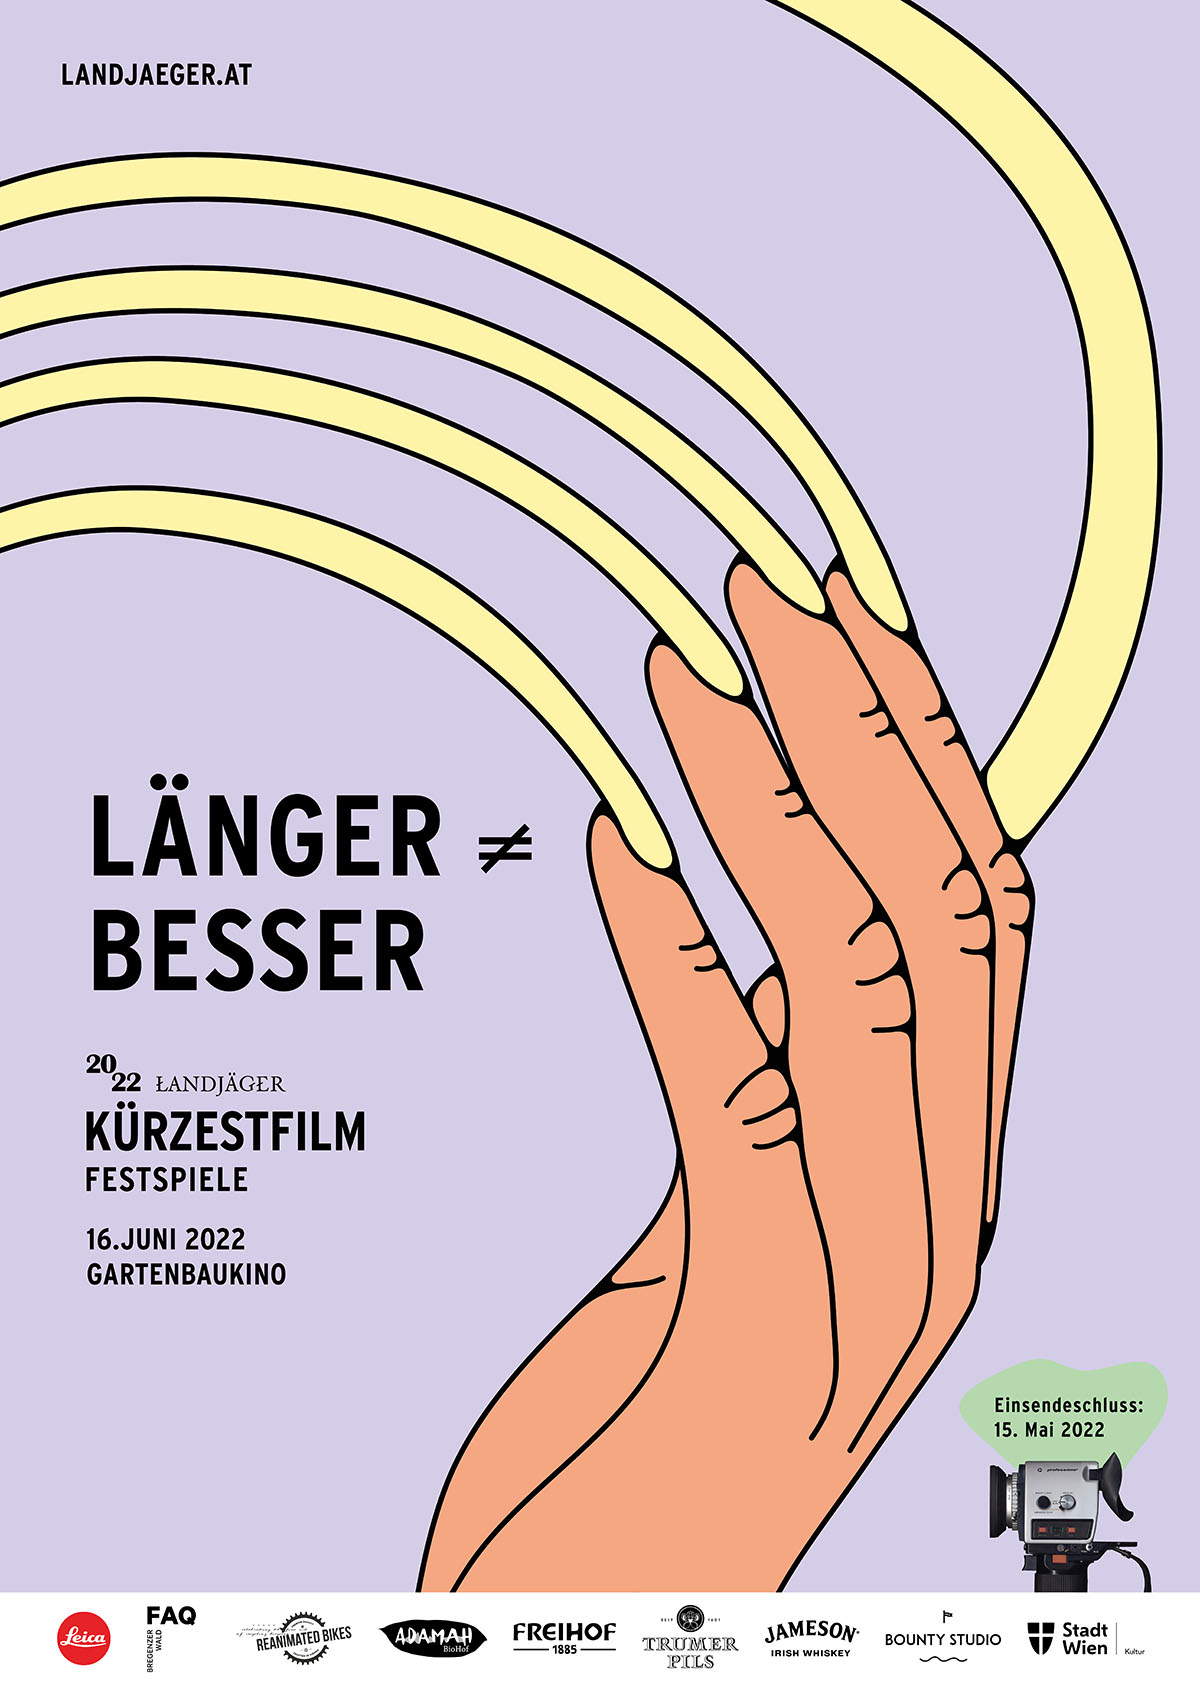 Landjäger Kürzestfilm Festspiele Trailer 2022